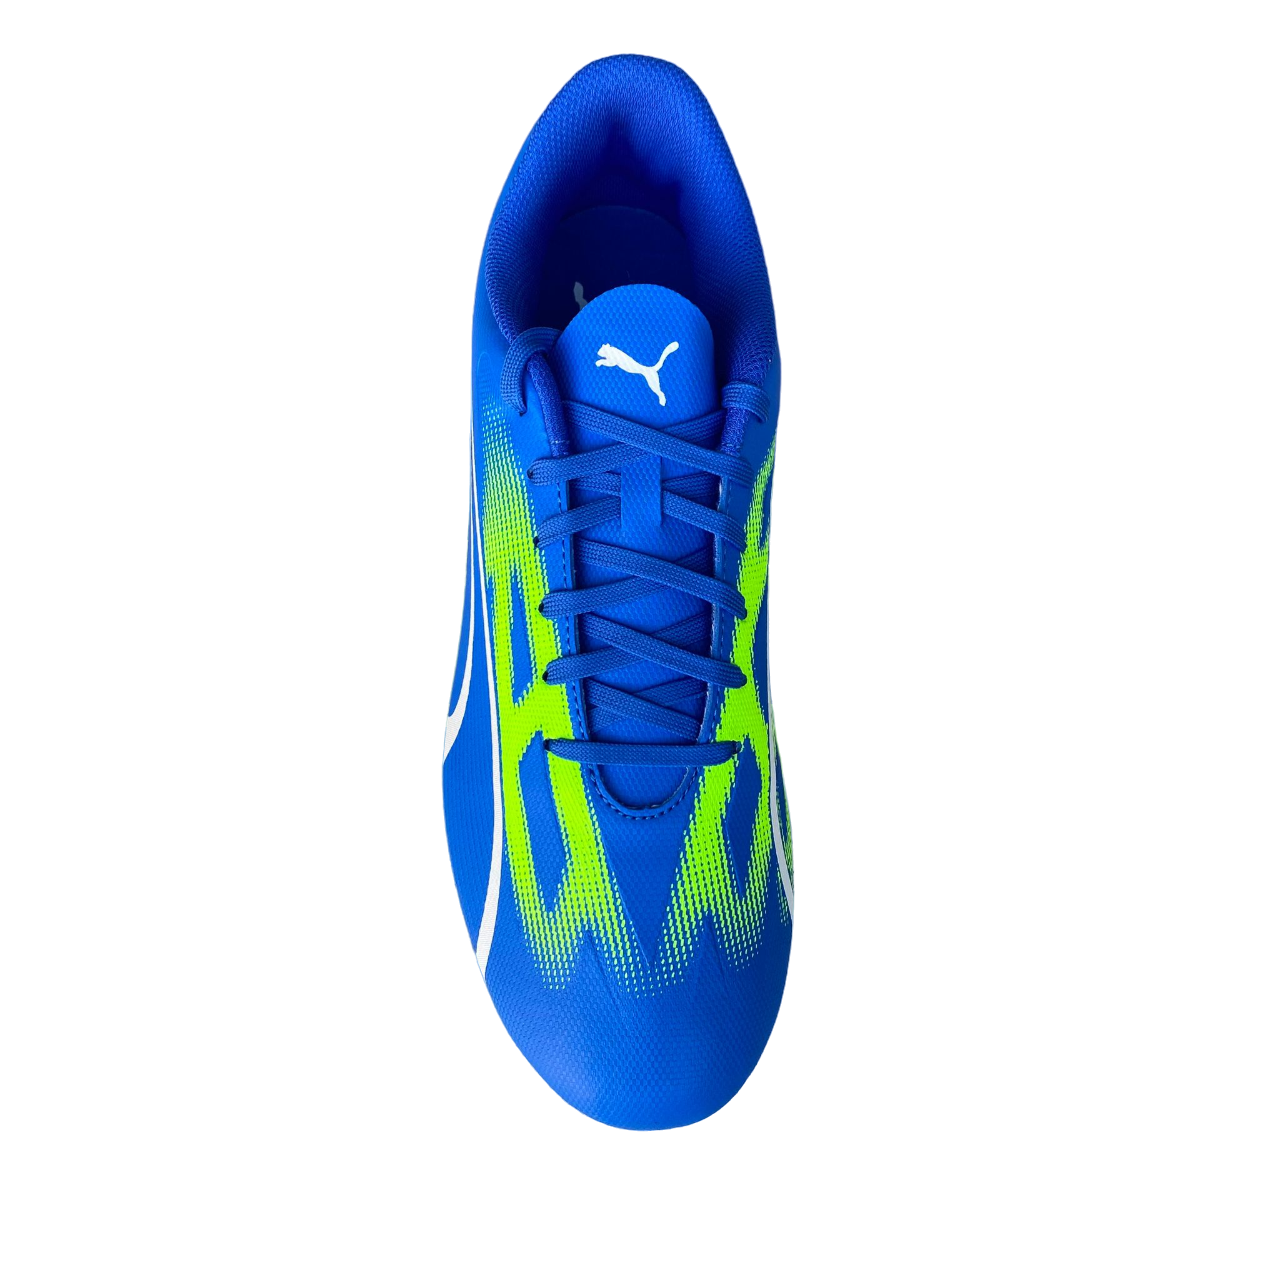 Puma scarpa da calcio da uomo Ultra Play FG/AG 107423 03 azzurro-bianco-verde